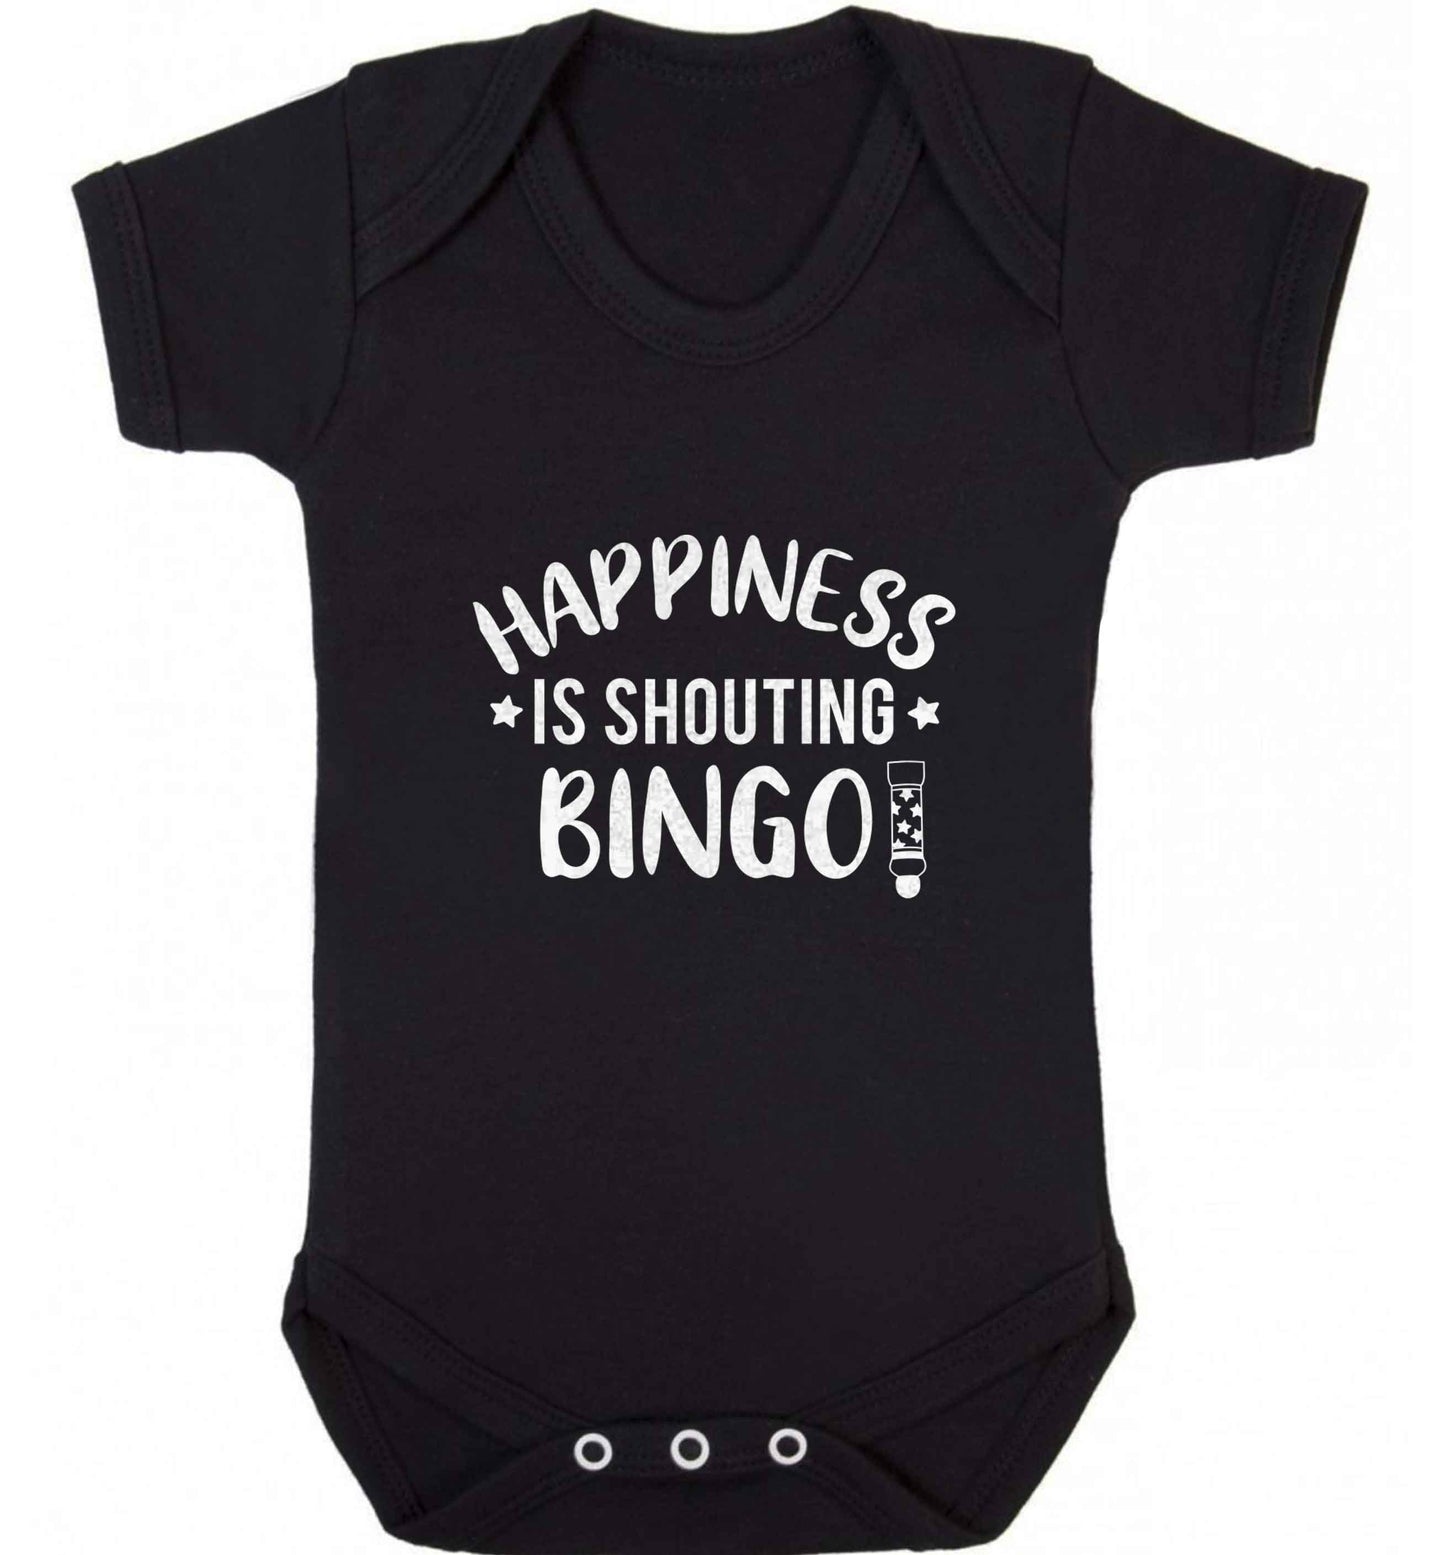 Happiness is shouting bingo! baby vest black 18-24 months